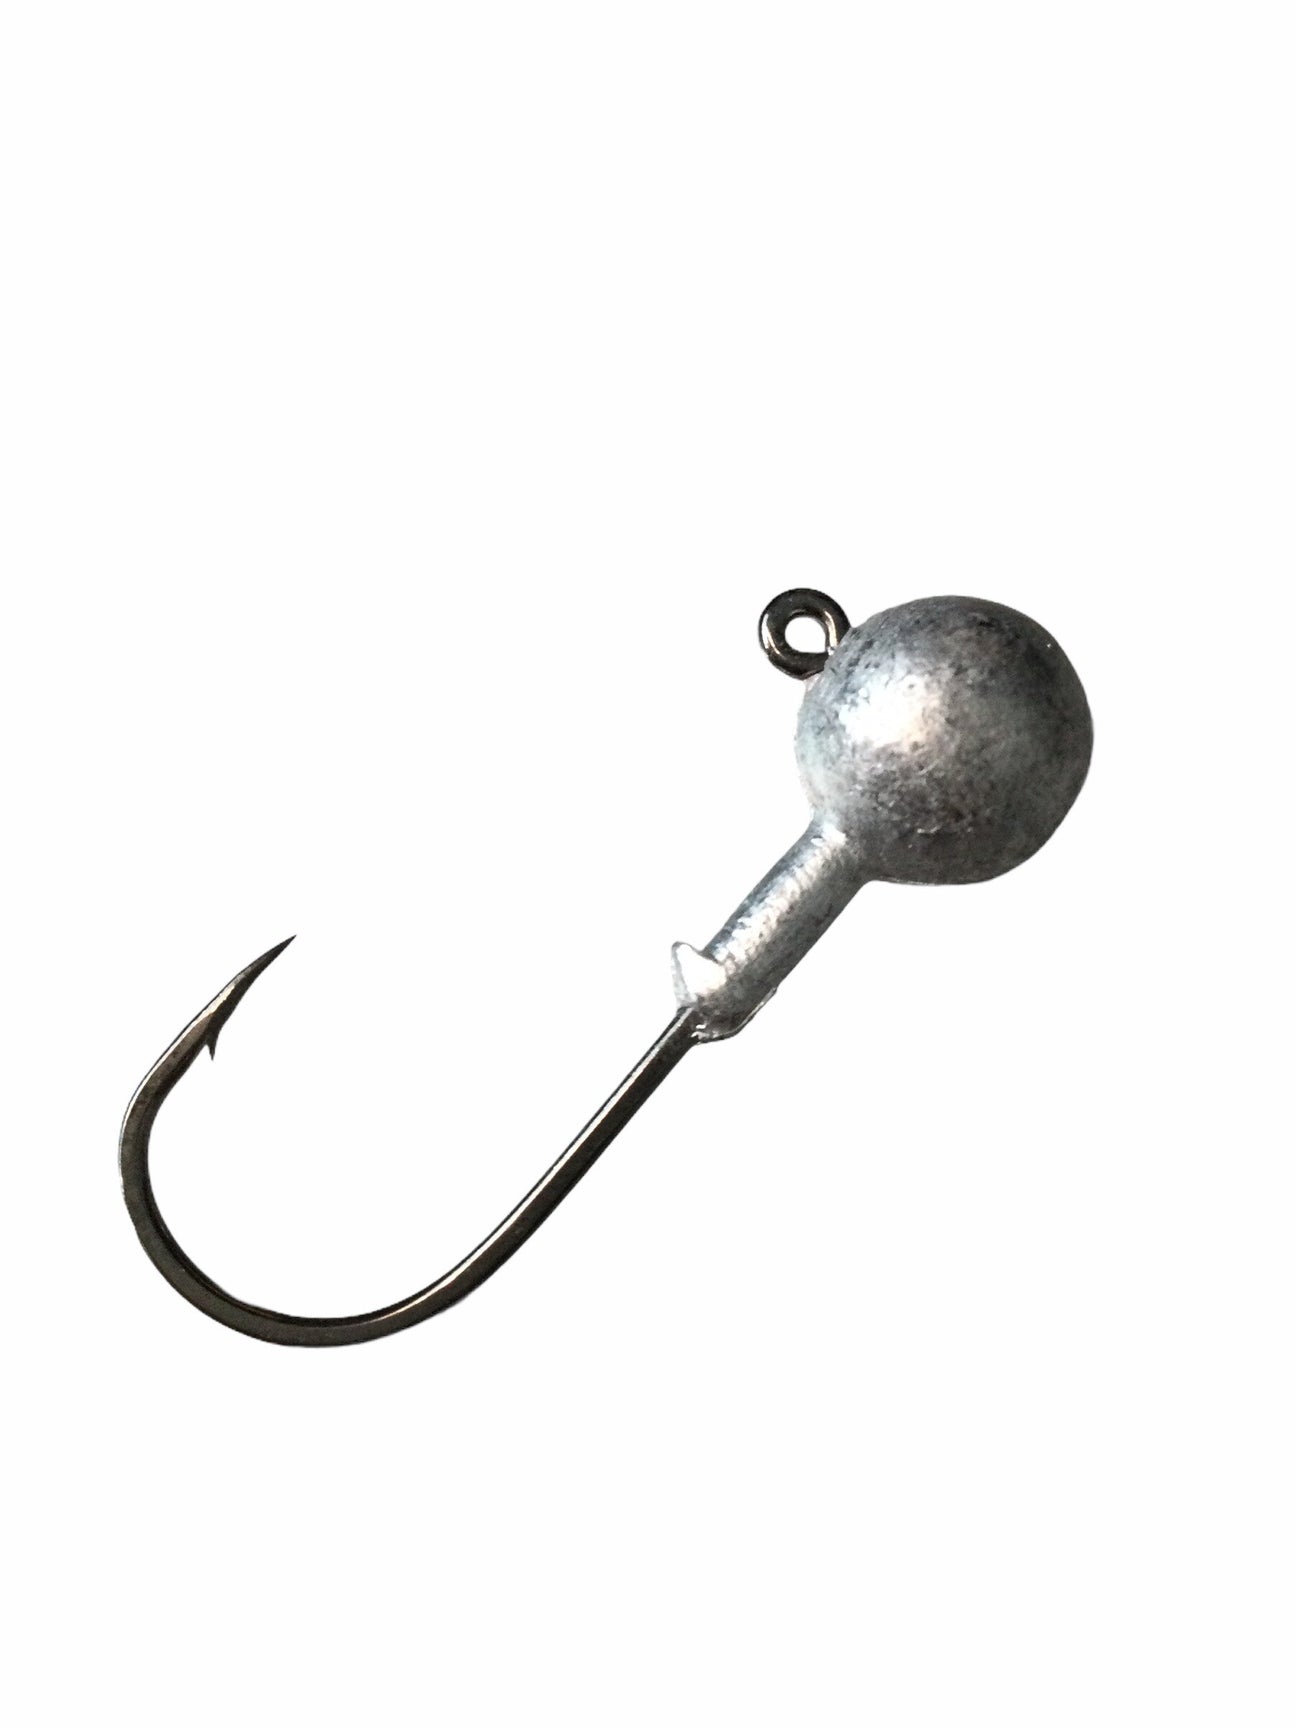 Owner Hooks: 1/2 oz Round Ball Lead Head Jig Hooks